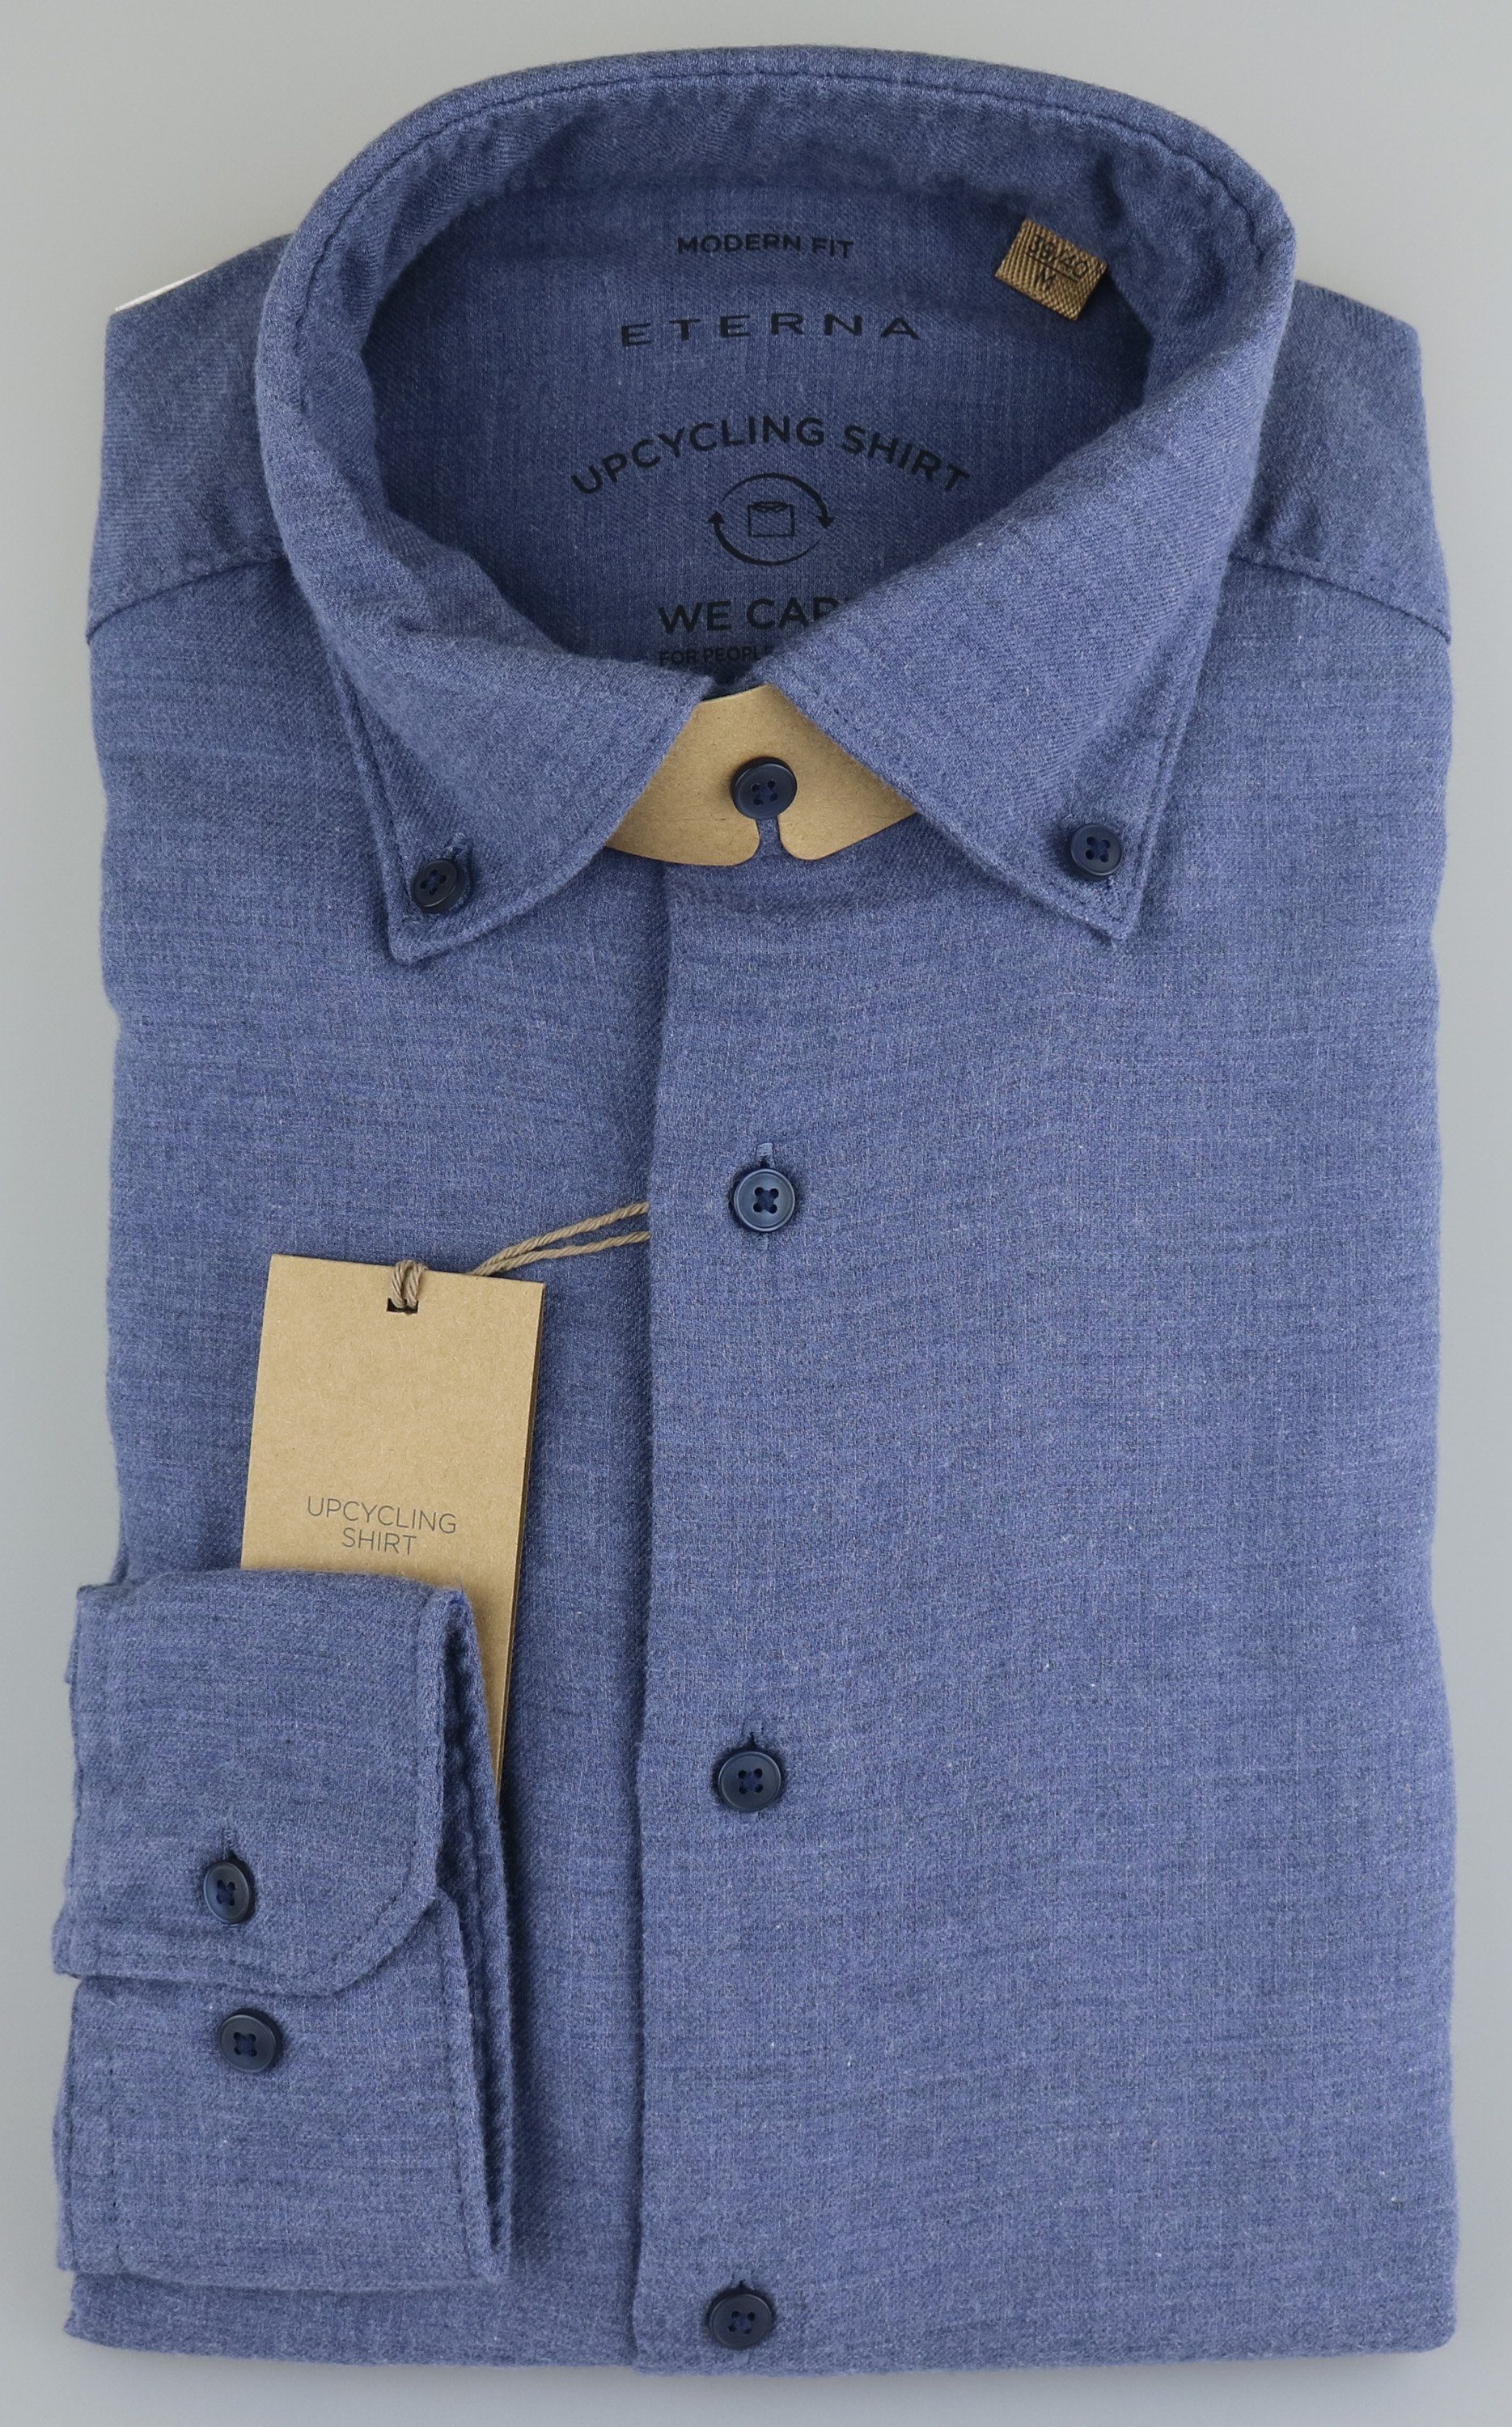 Eterna Klassische Bluse ETERNA MODERN FIT UPCYCLING SHIRT Langarm Hemd jeansblau 2389-17-VS74 | Blusen